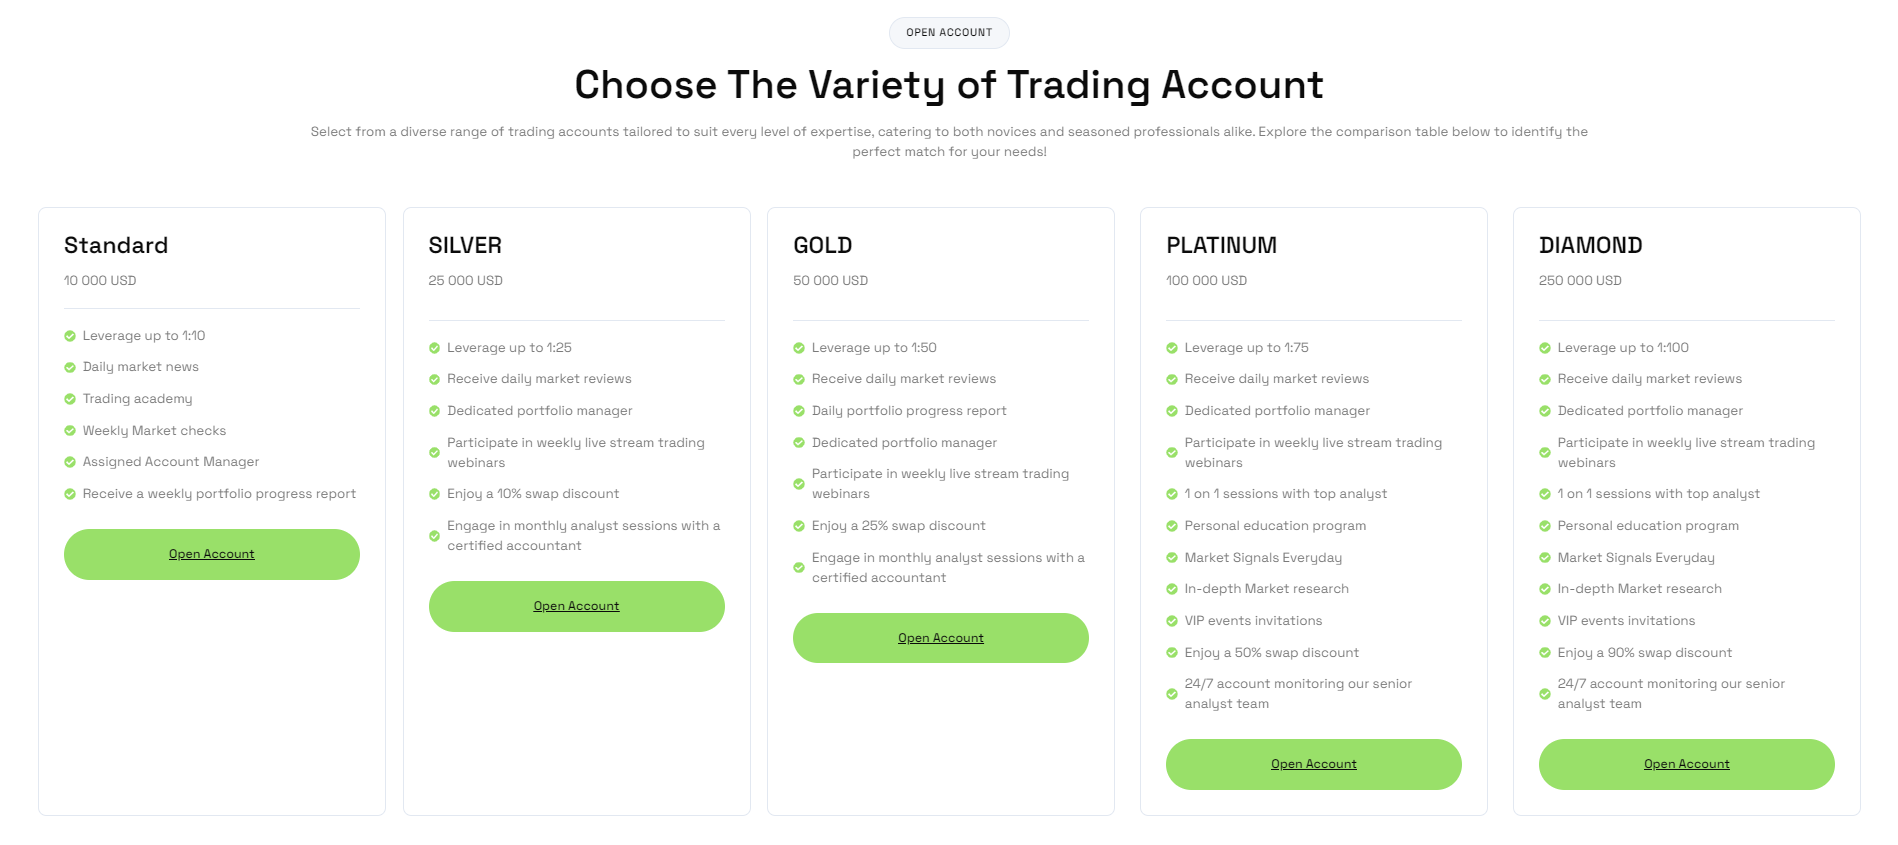 Trading accounts